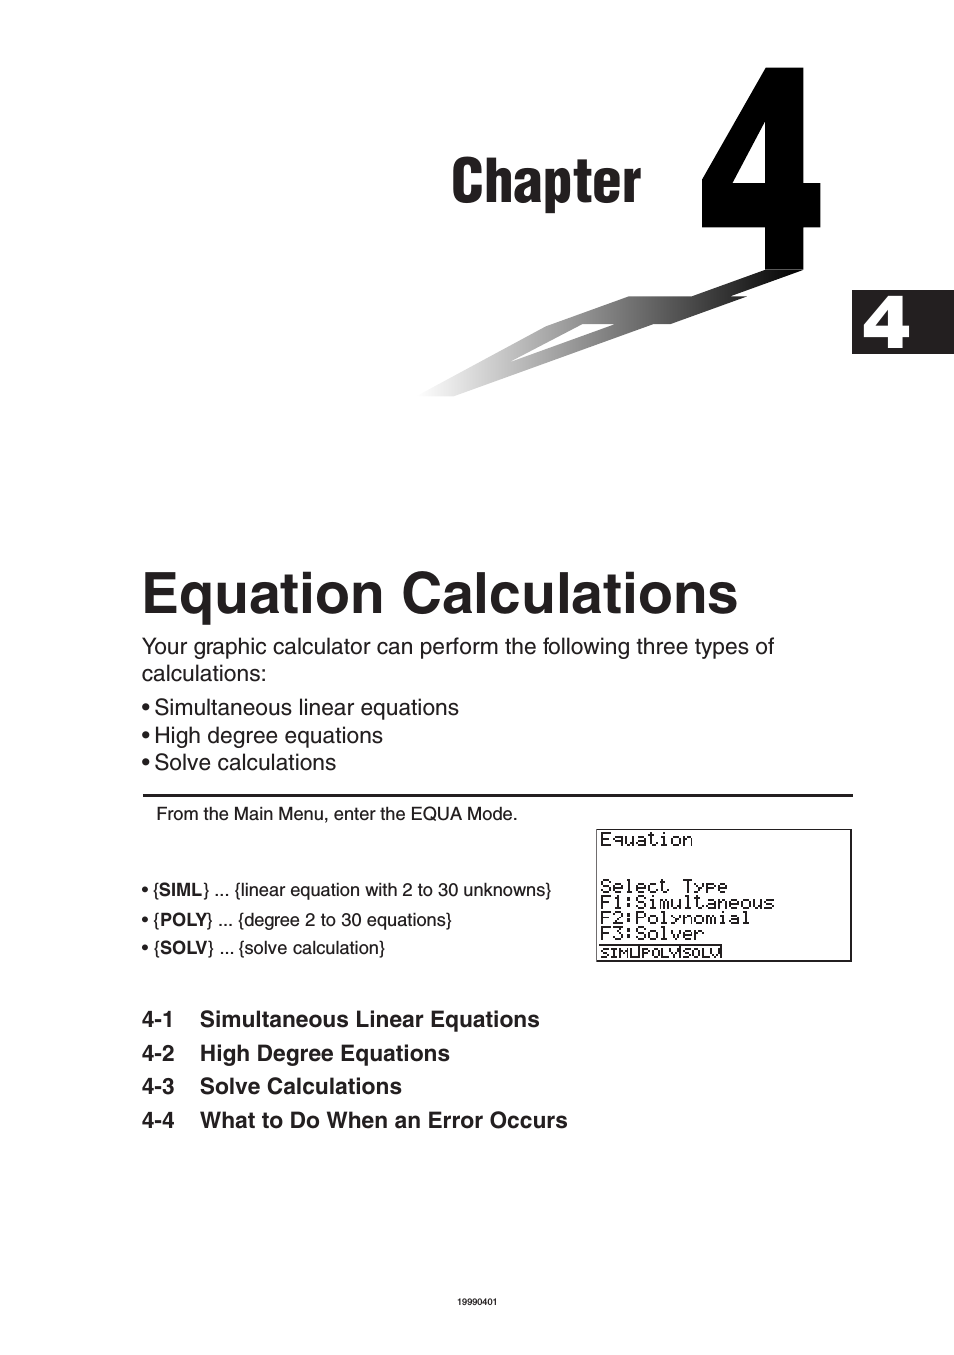 ALGEBRA FX 1.0 PLUS Equation Calculations